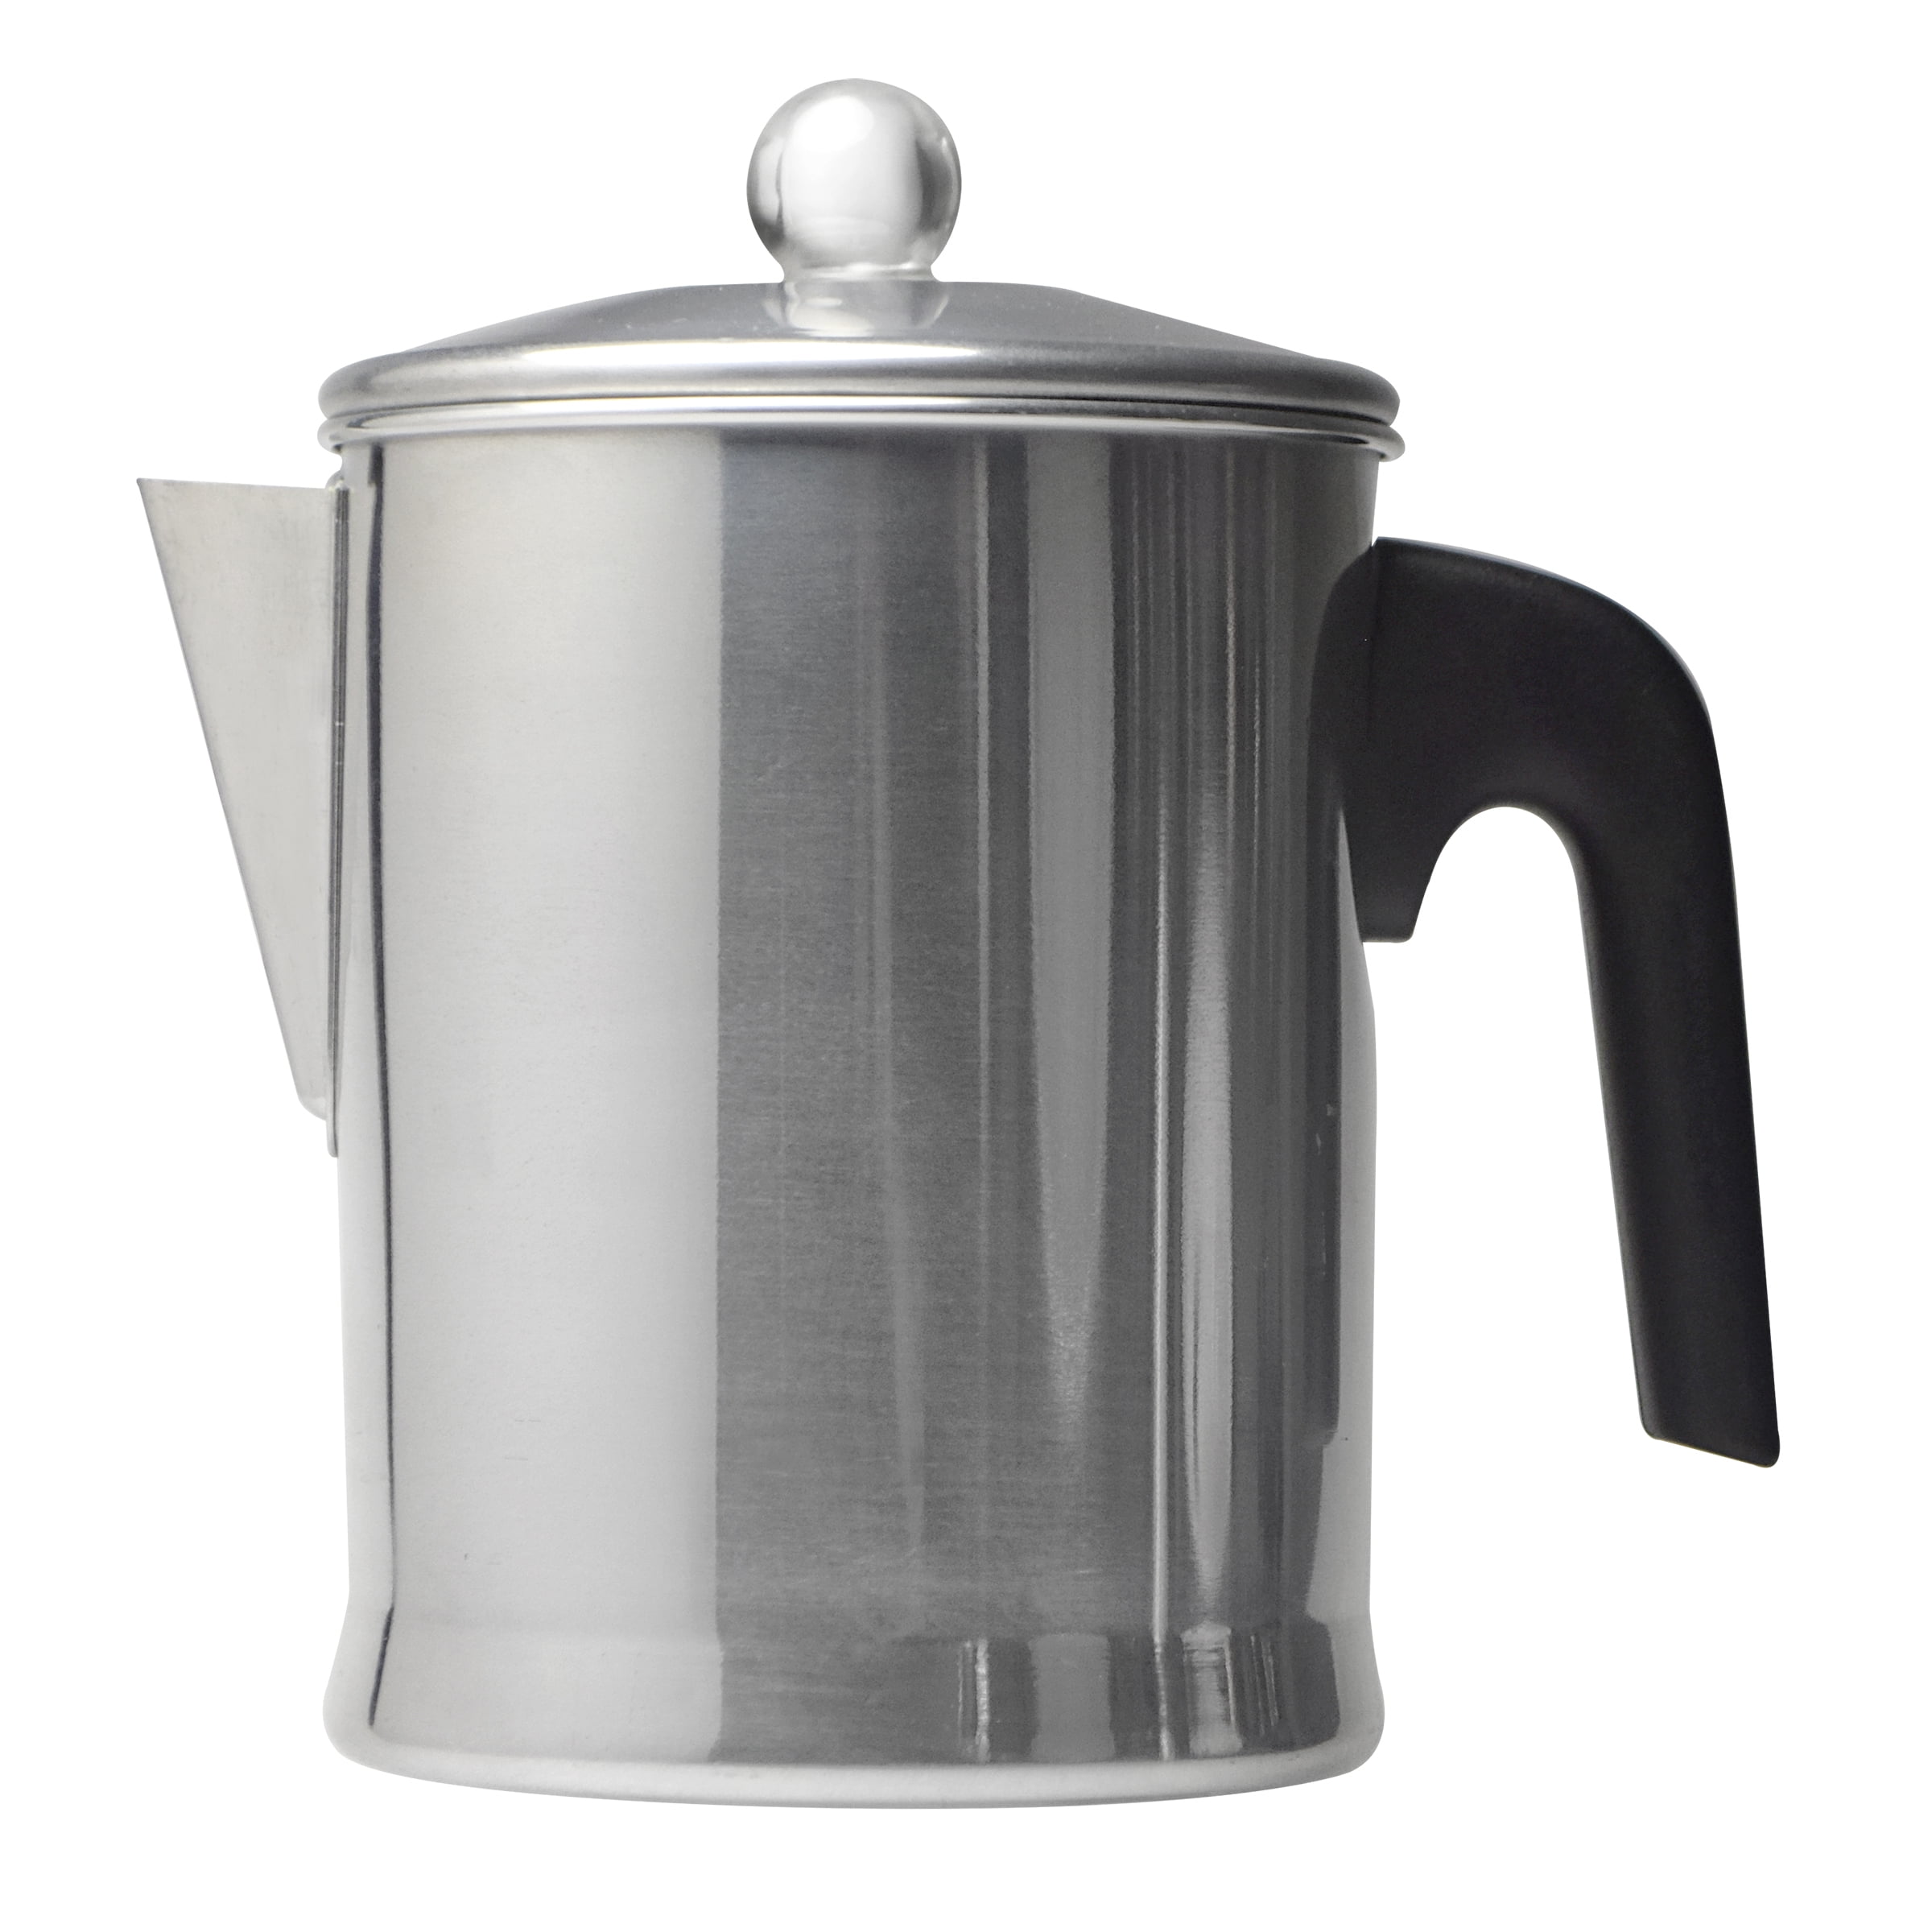 Coleman Stainless Steel 12 Cup Coffee Percolator - Walmart.com